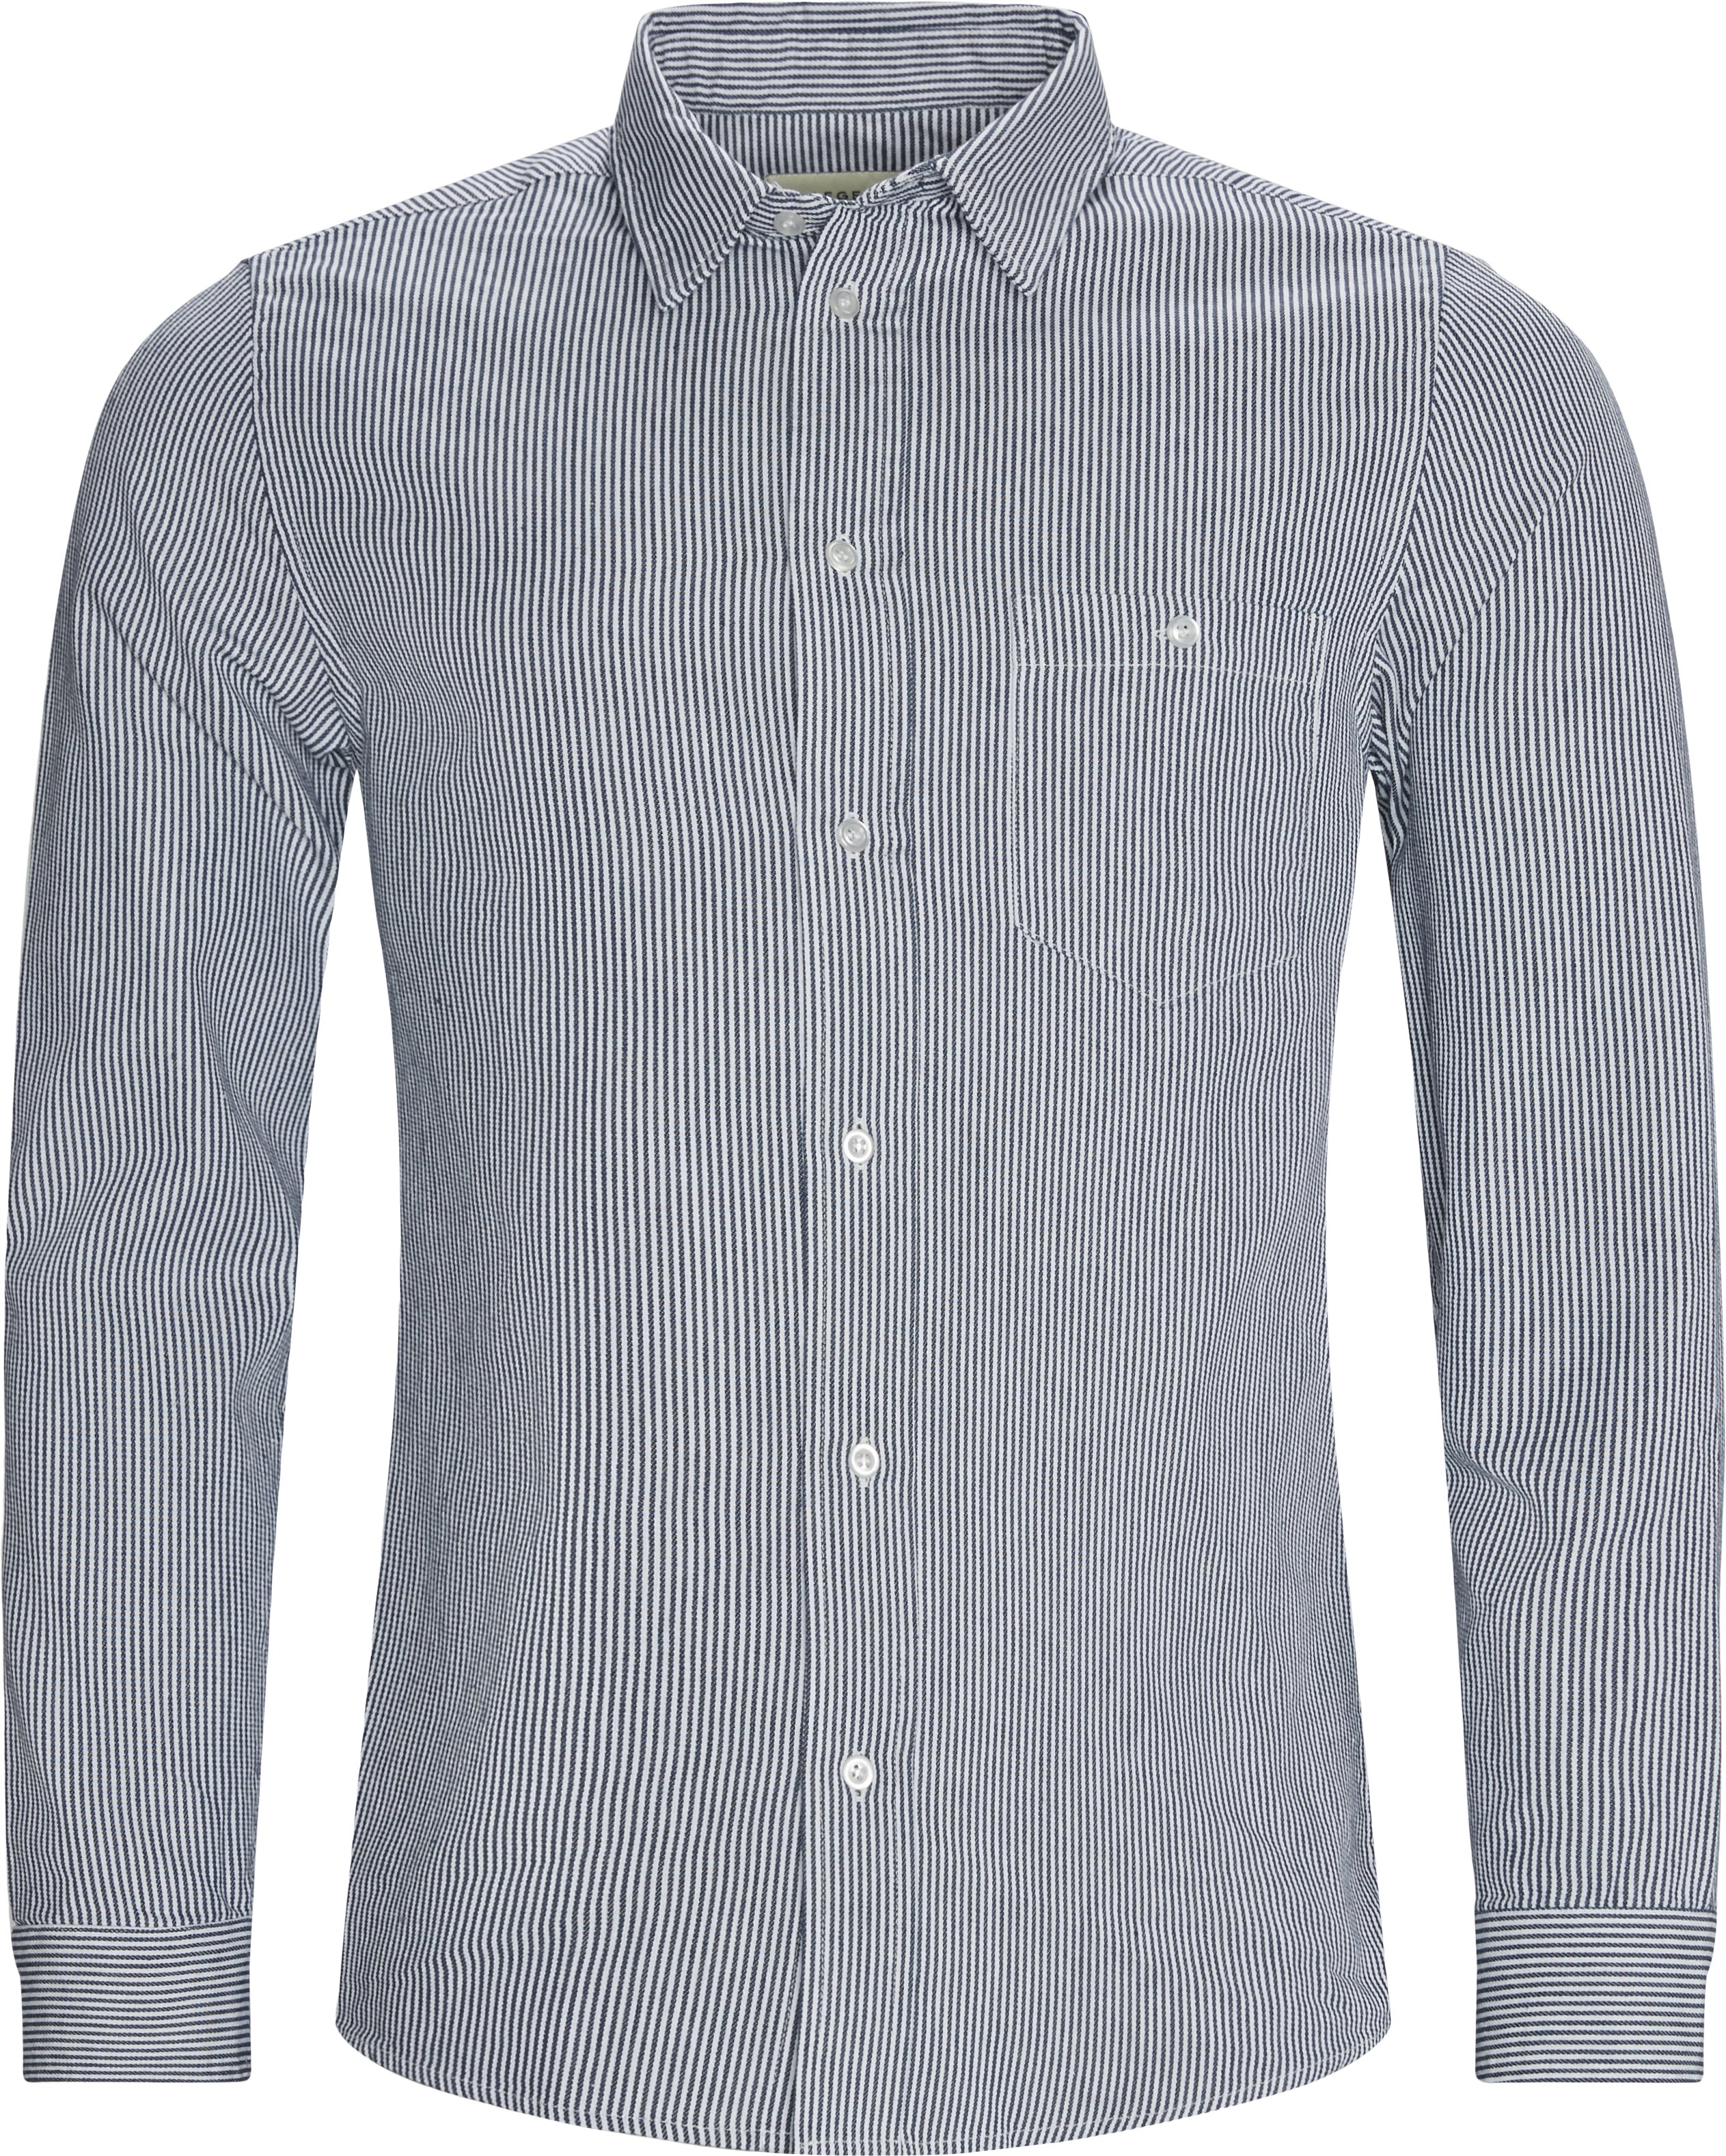 Odessa Shirt - Skjorter - Regular fit - Blå